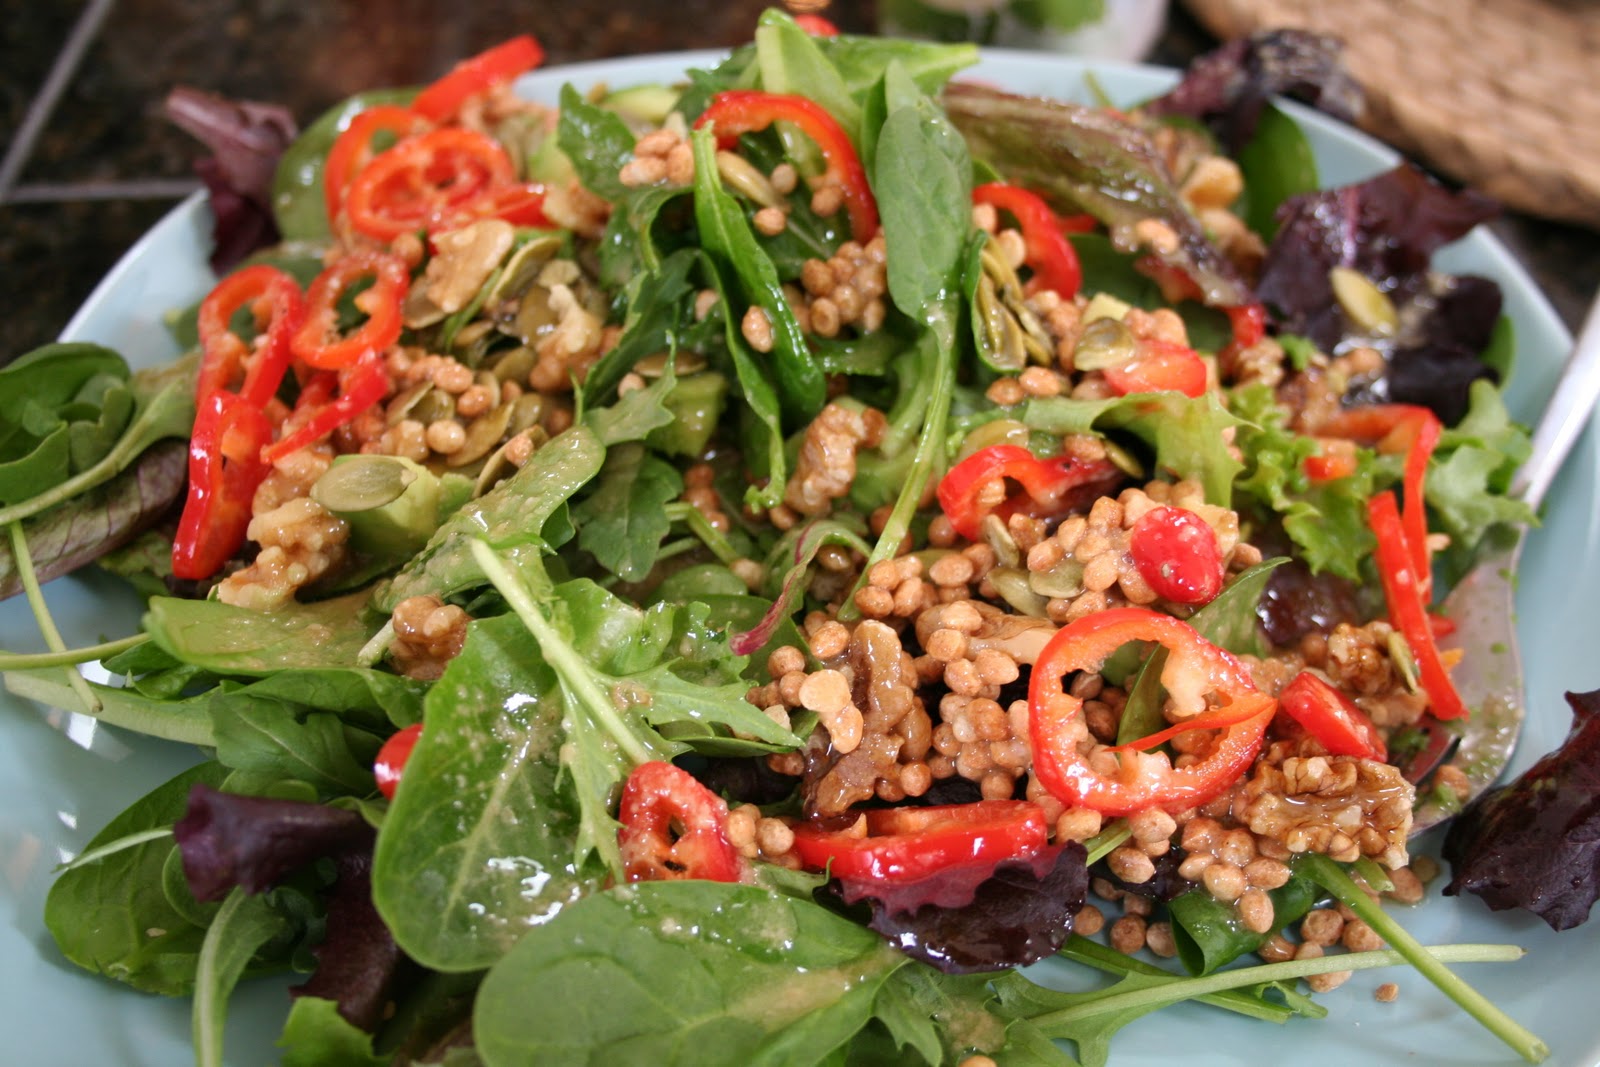 It's Free!: Crunchy Mixed Greens Salad